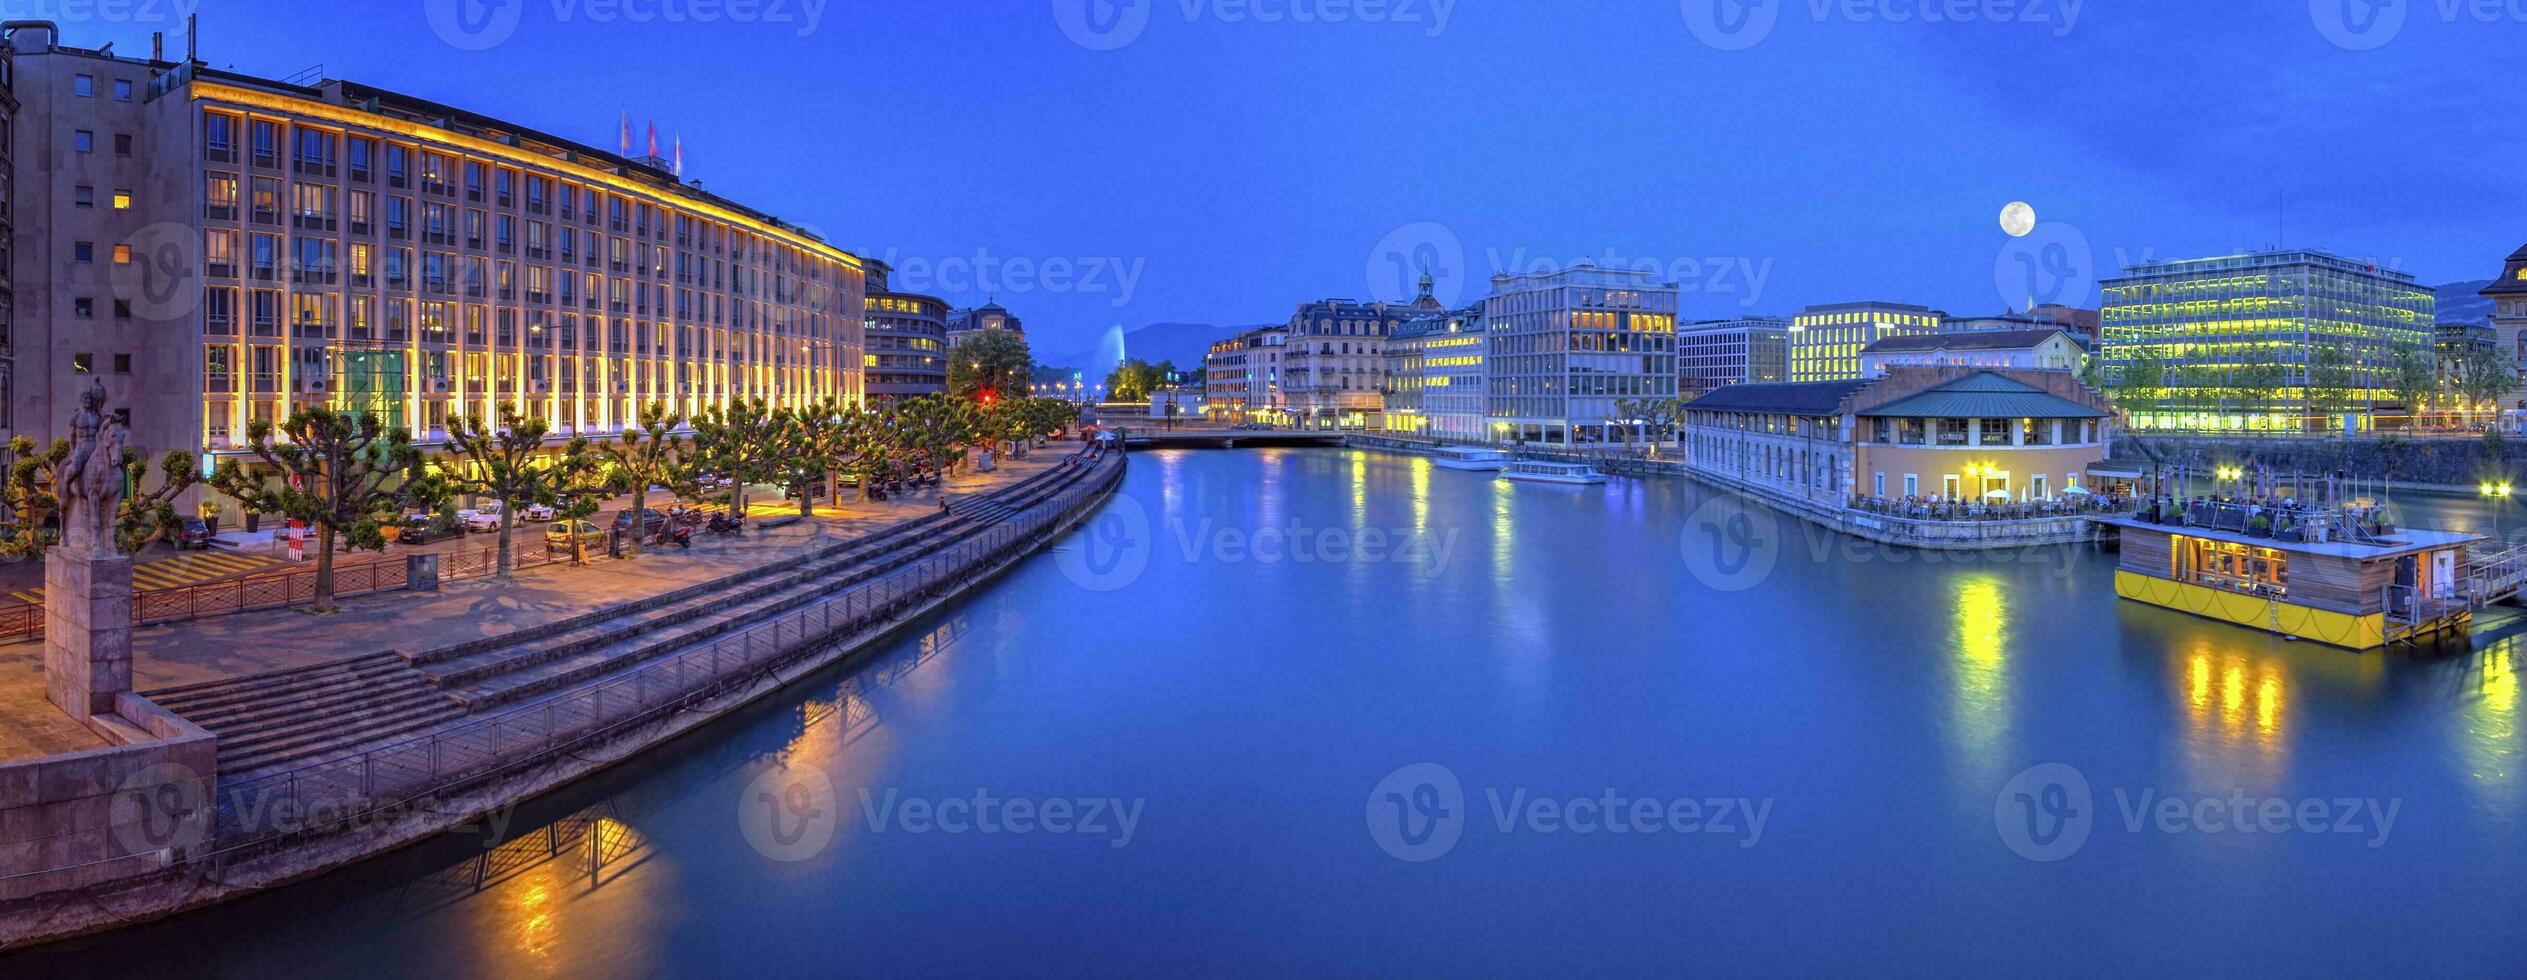 stedelijk visie met beroemd fontein en Rhône rivier, Genève, Zwitserland, hdr foto